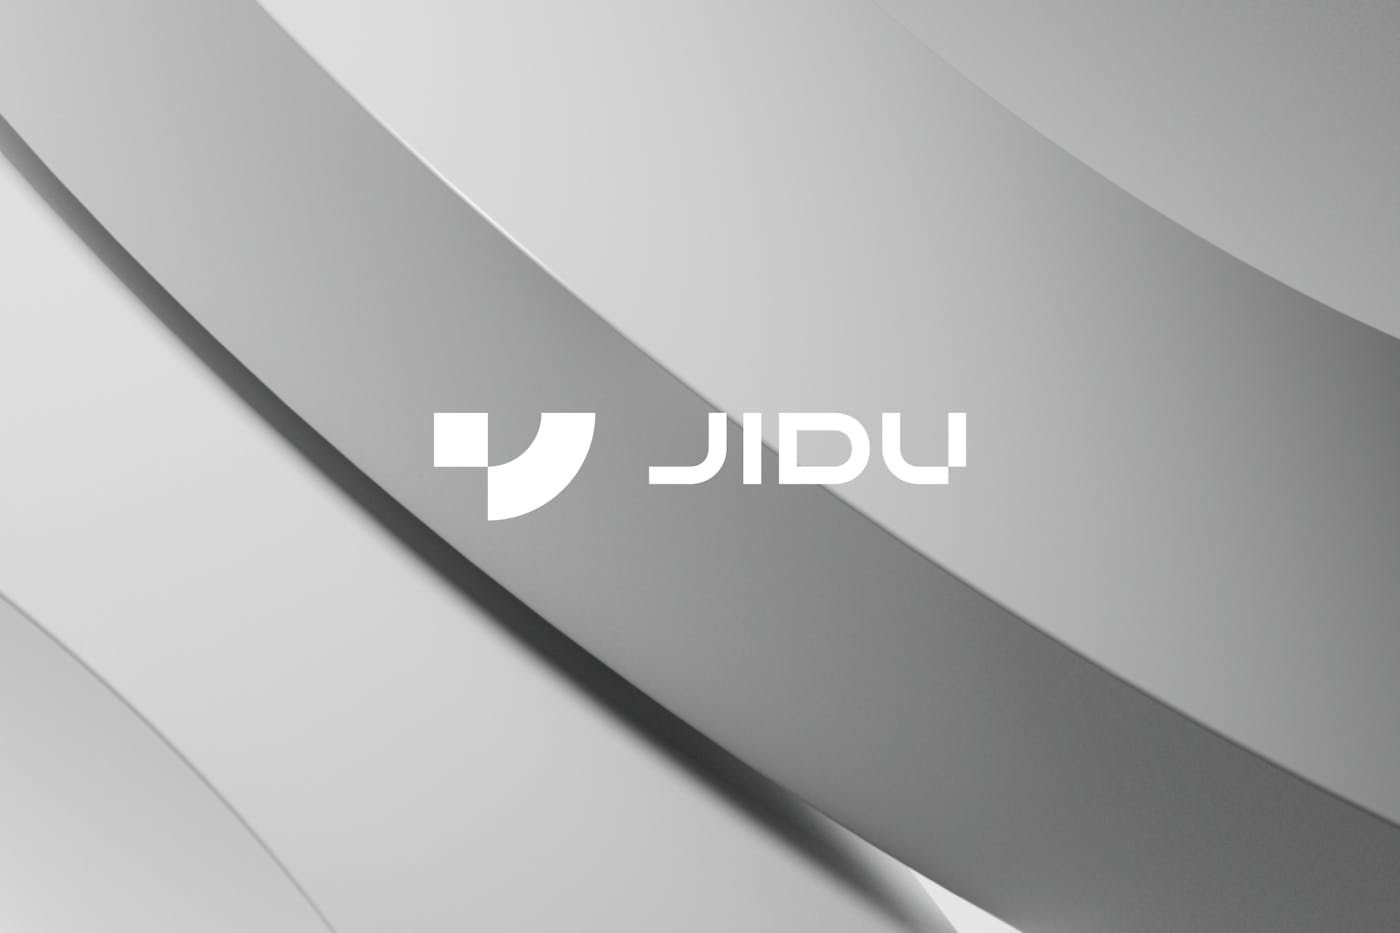 Jidu logo 02